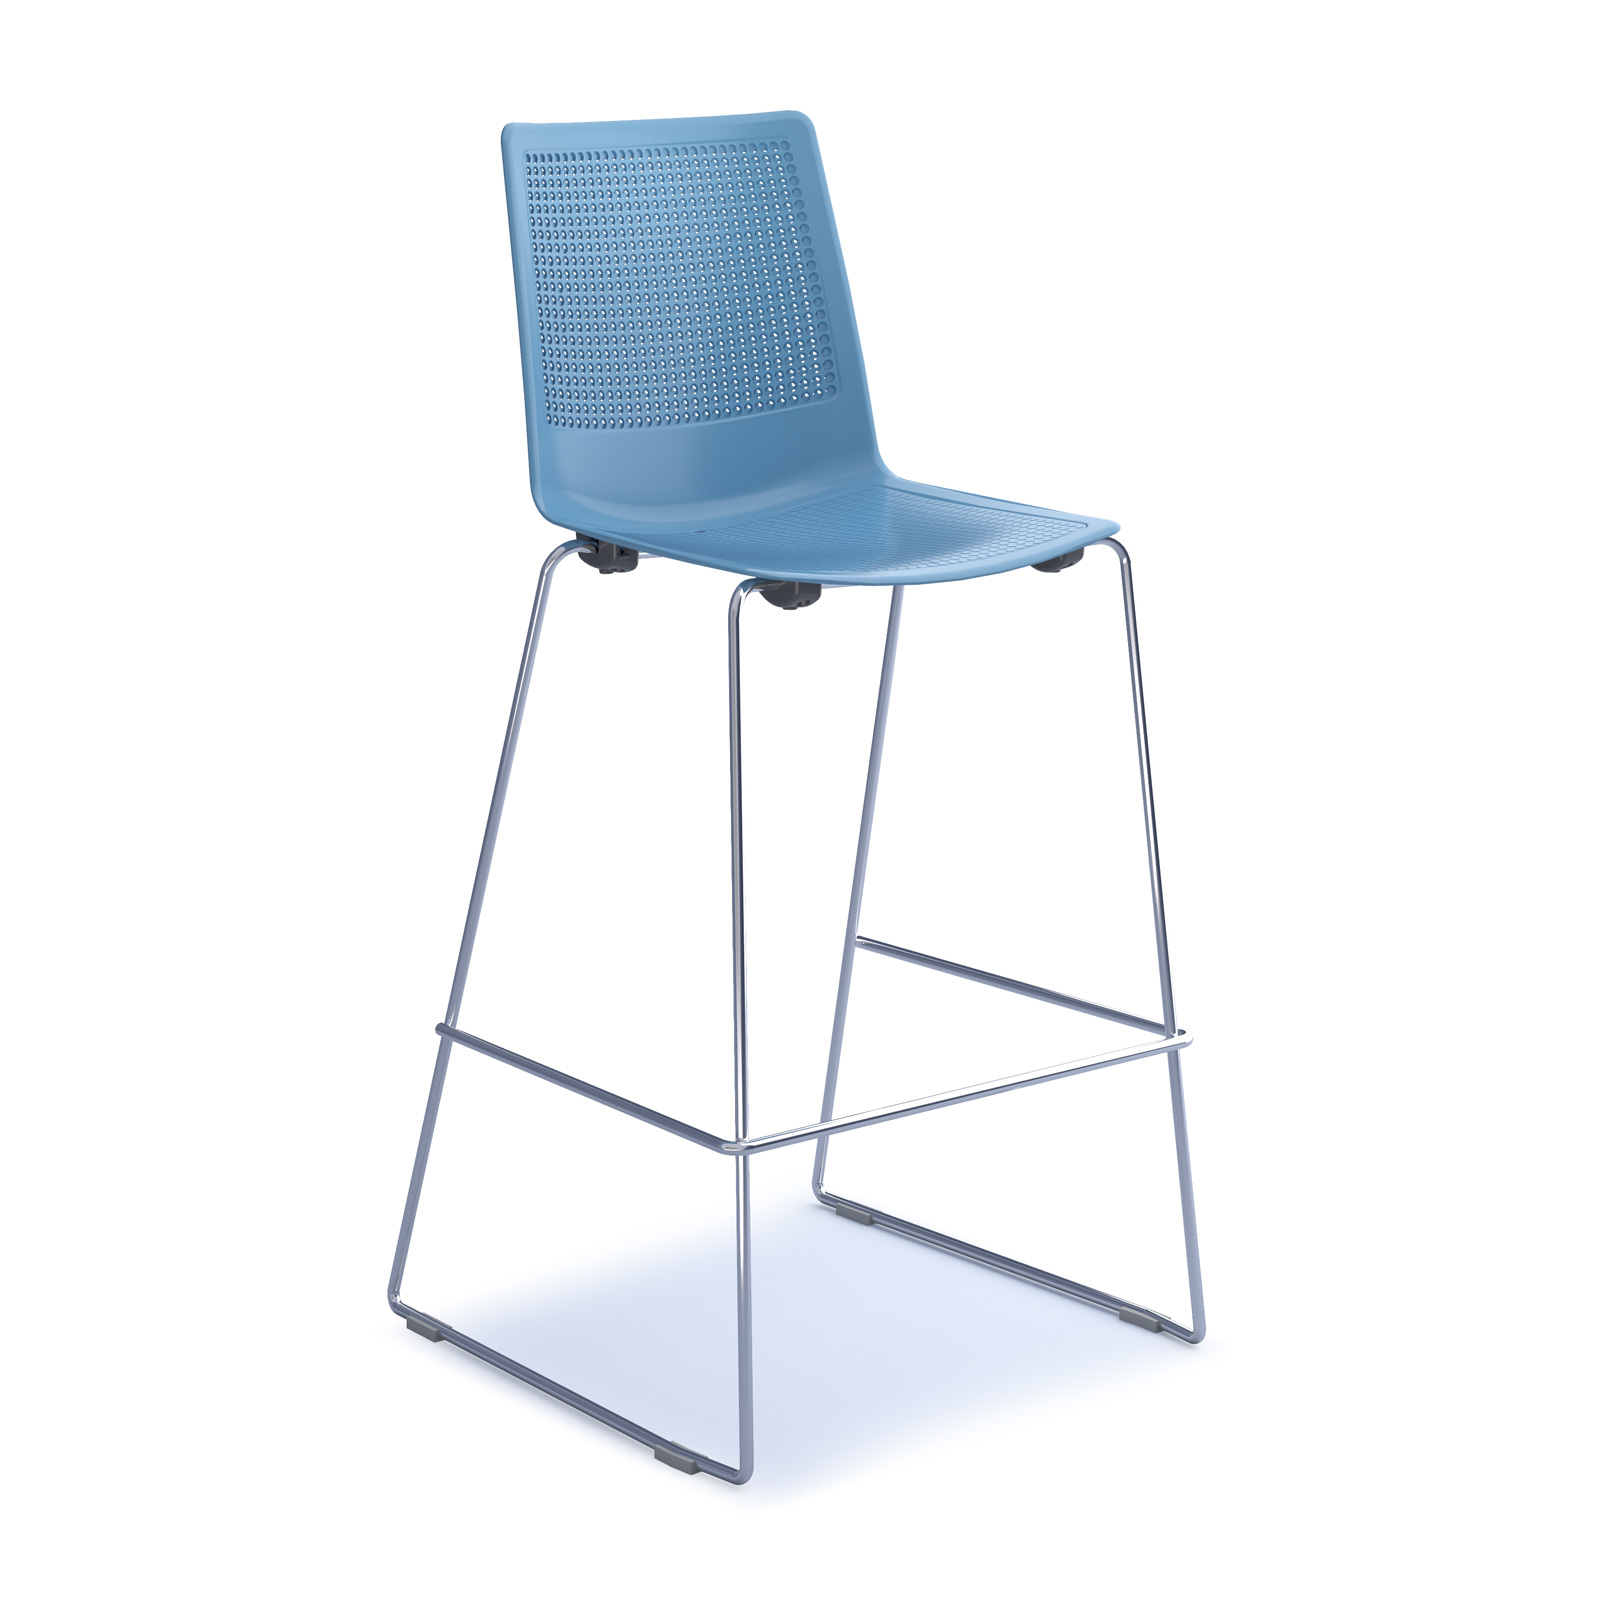 Harmony multi-purpose stool with sled frame